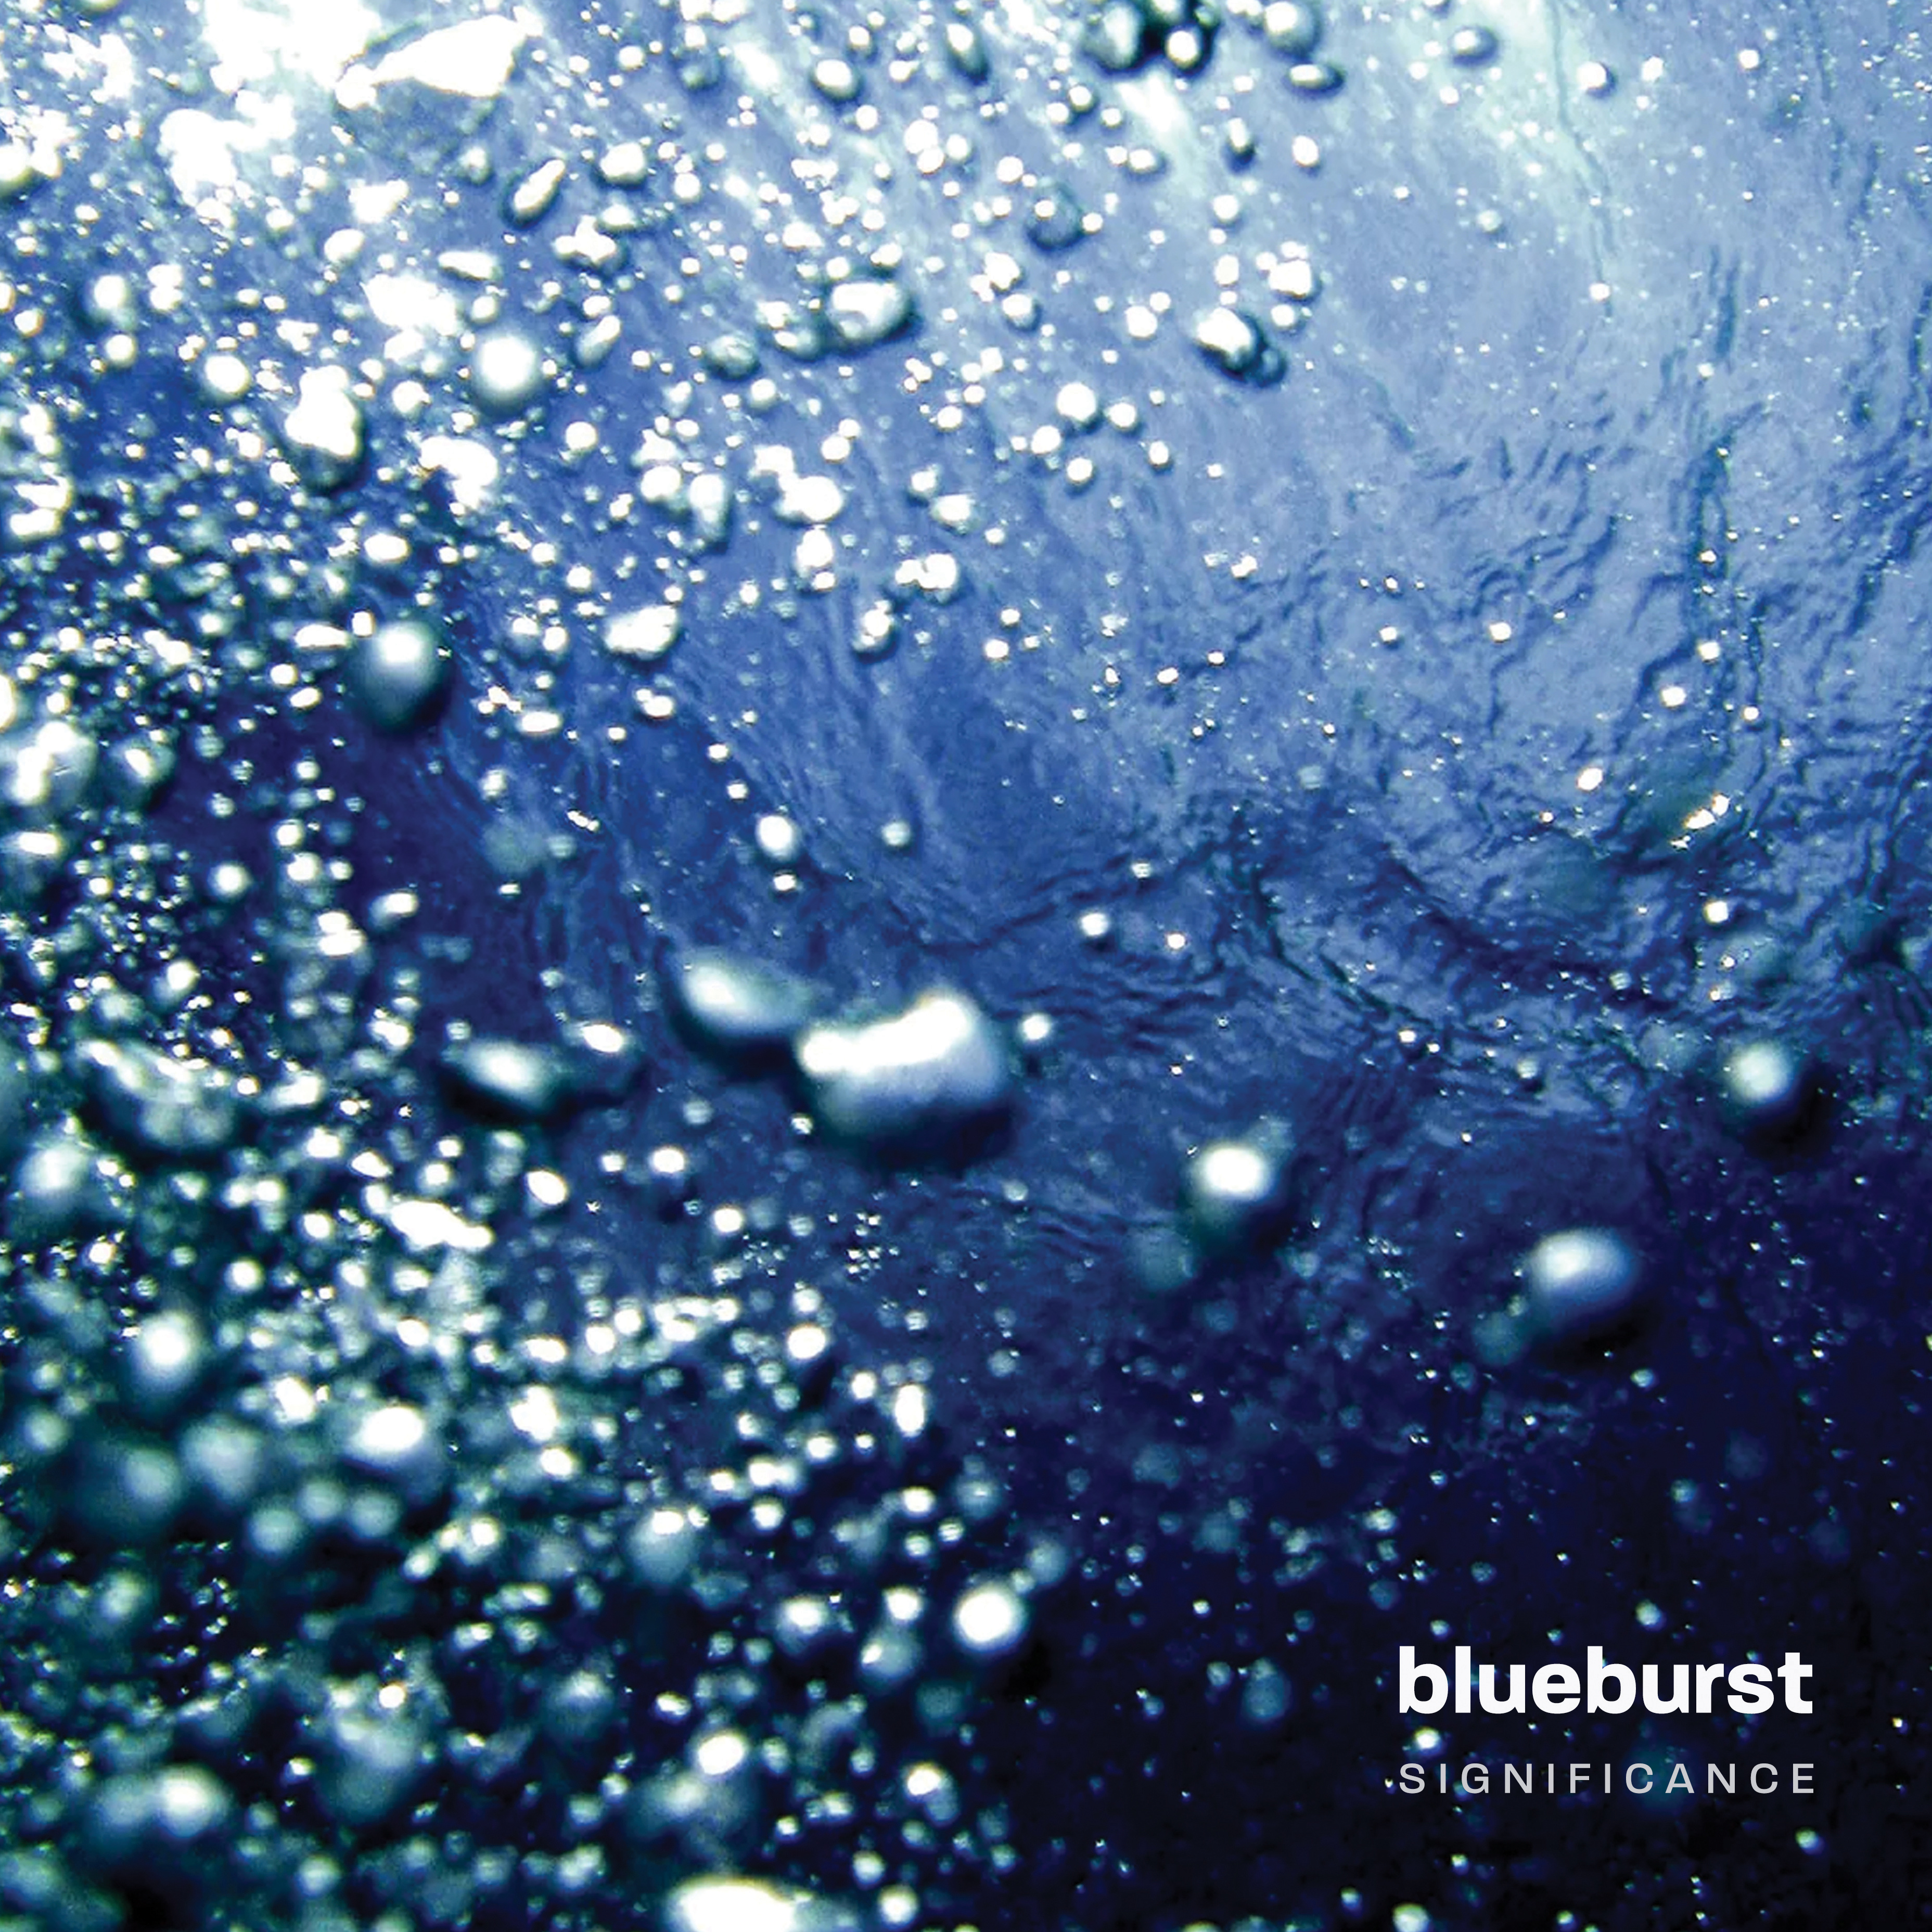 Blueburst Ignites the Alt Rock Scene with Debut Album ‘Significance’